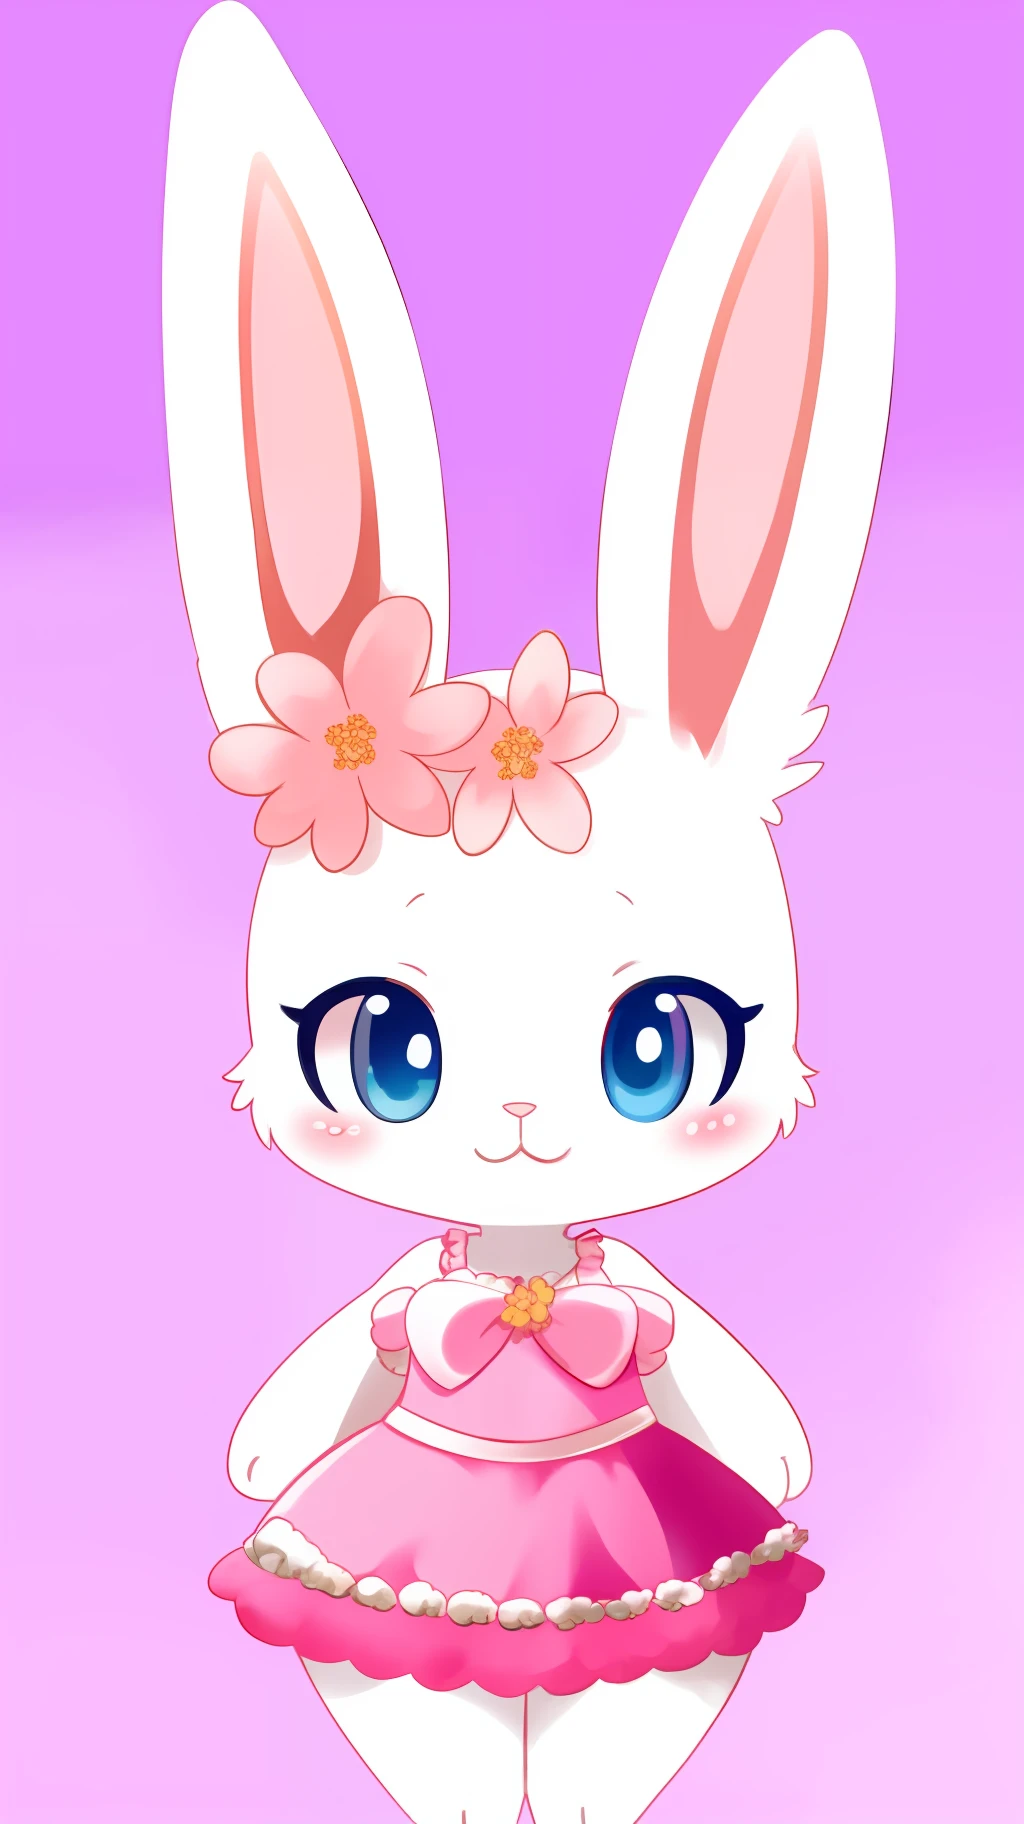 white bunny in a pink dress, original chibi bunny girl, cute anthropomorphic bunny, bunny girl, cute character, rabbit_bunny, bunnies, cute anime, cute kawaii girl, cute digital art, rabbits, the rabbit has white fur, lovely and cute, cute art style, cute anime style, kawaii chibi, 1 girl, solo, (floral,twilight background),flat colors"